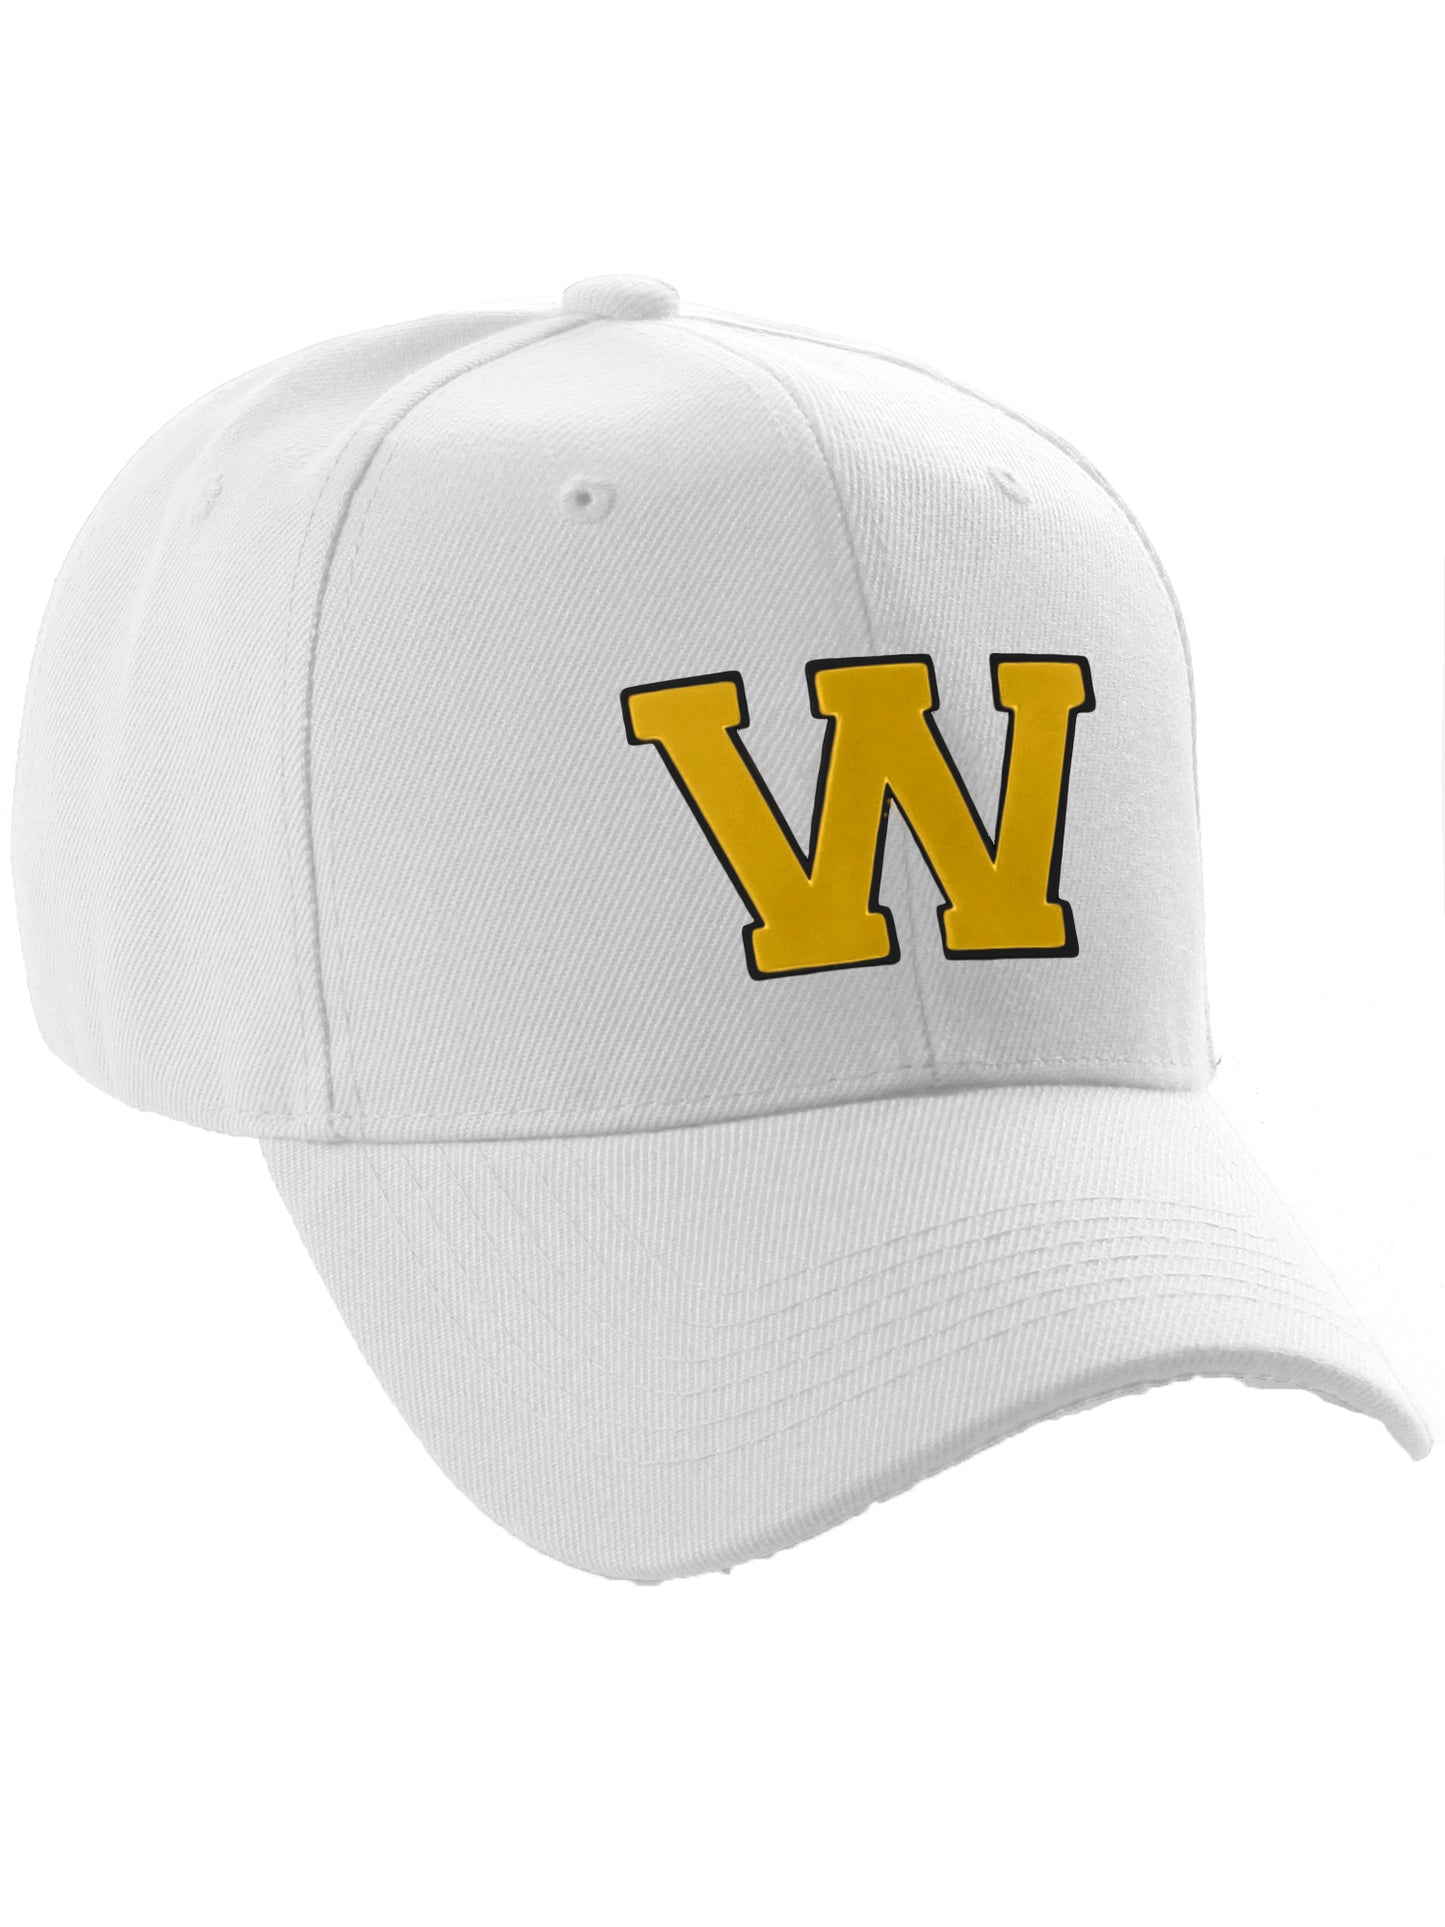 Classic Baseball Hat Custom A to Z Initial Team Letter, White Cap Black Gold